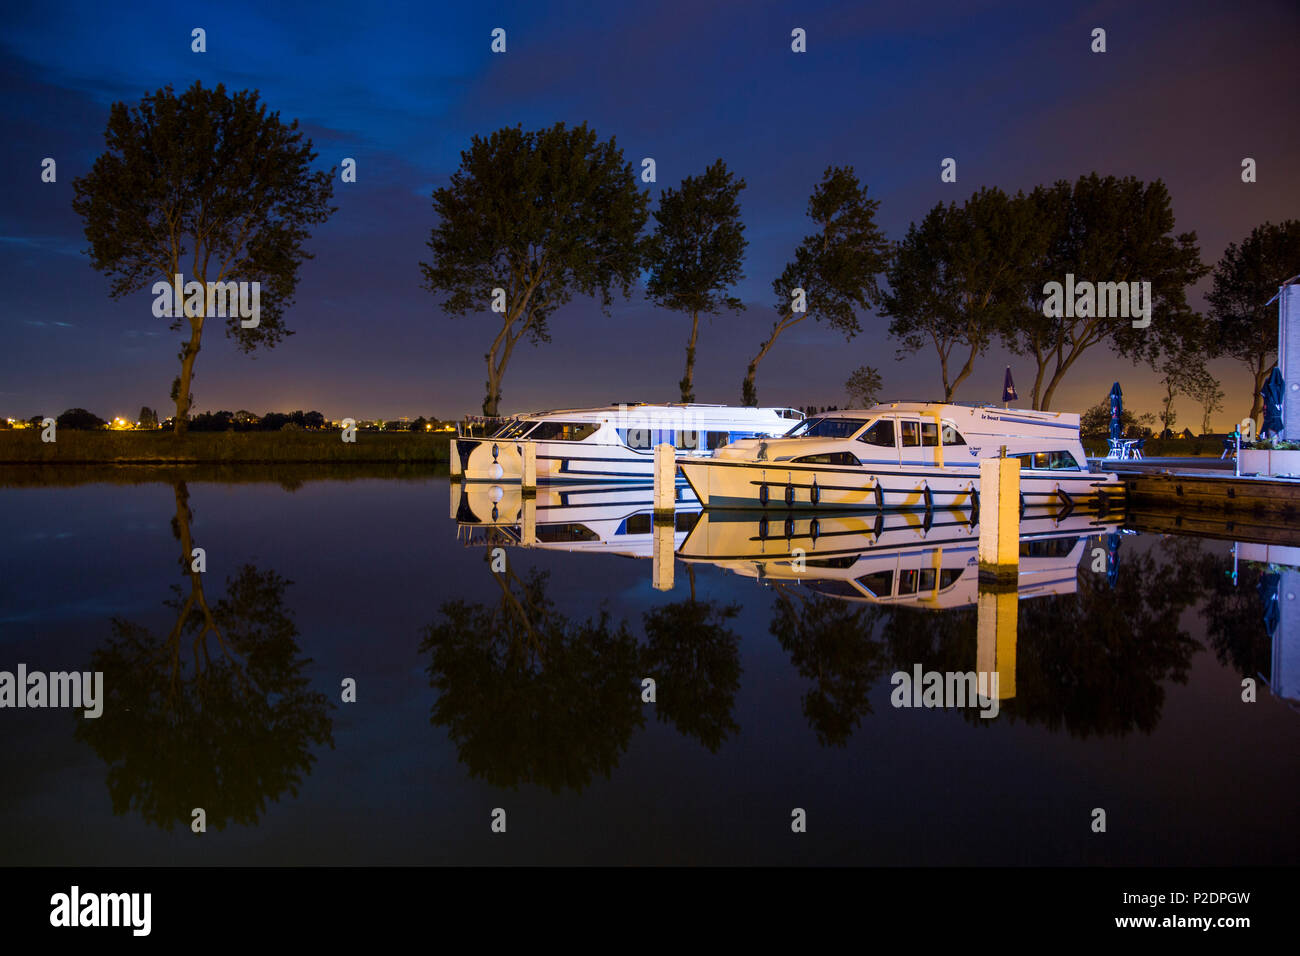 Le Boat Royal Mystique and Vision 3 houseboats at Westhoek Marina at night, Nieuwpoort, Flemish Region, Belgium Stock Photo